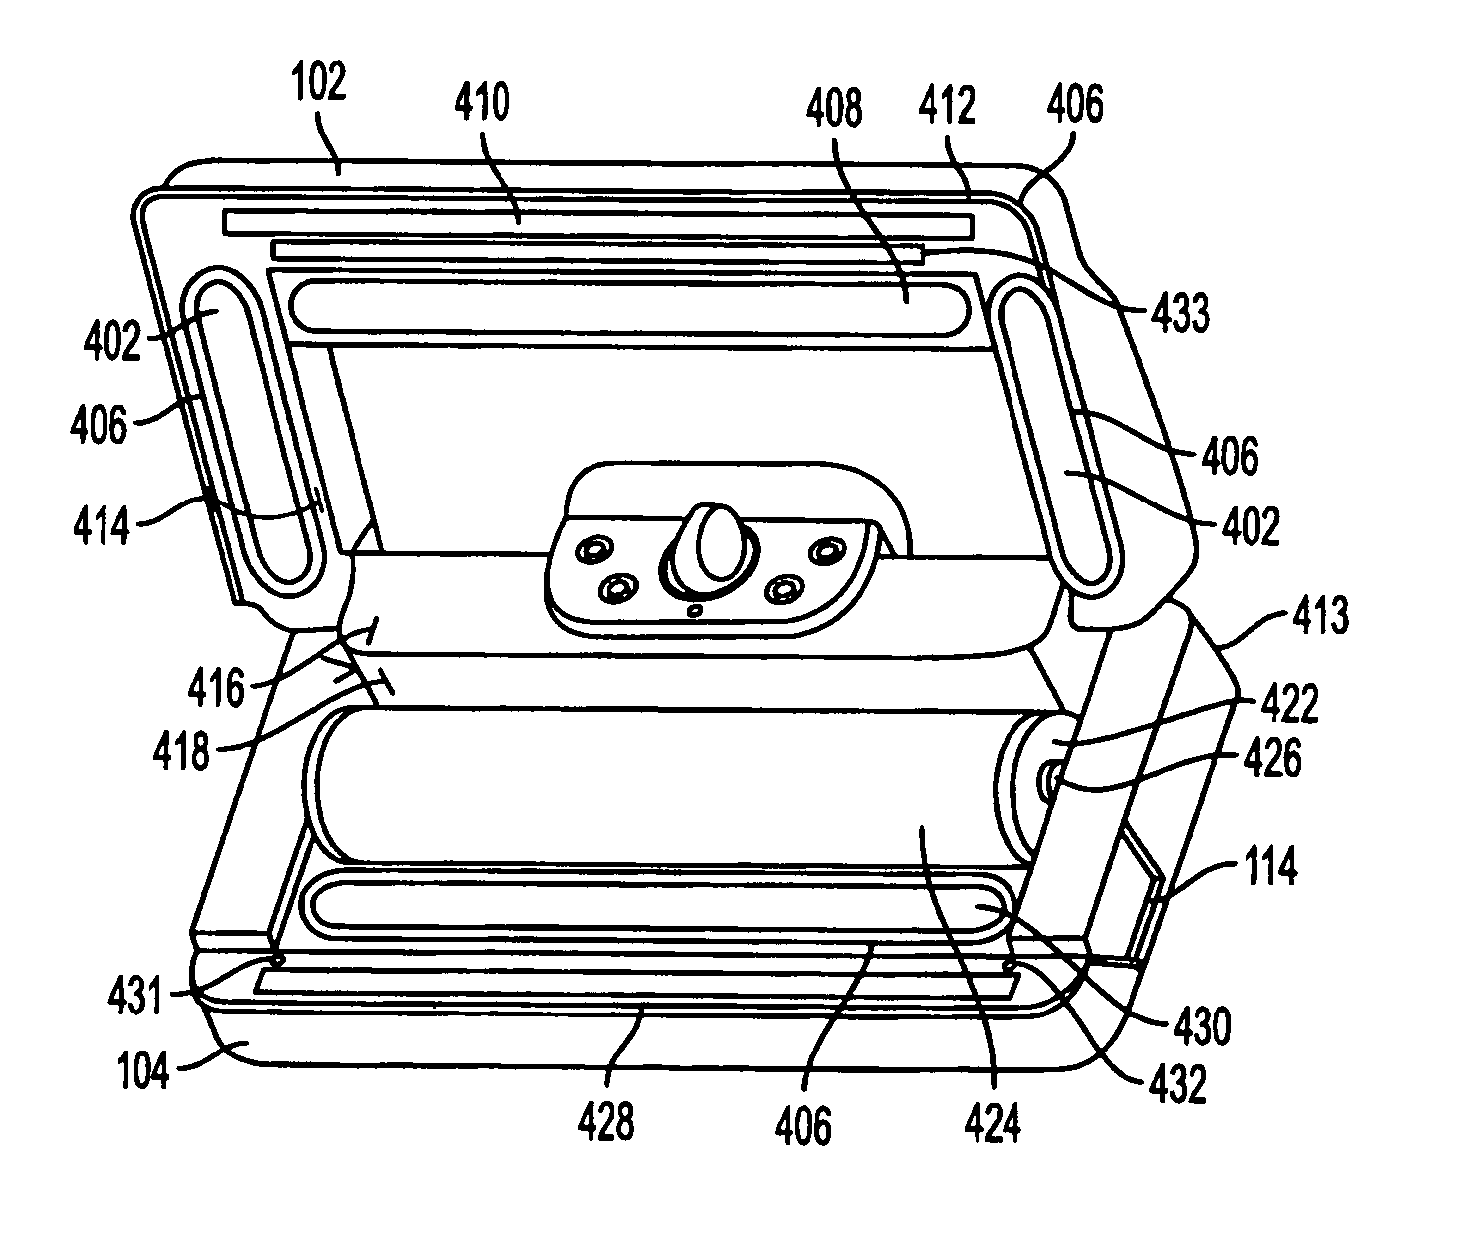 Fluid sensing in a drip tray